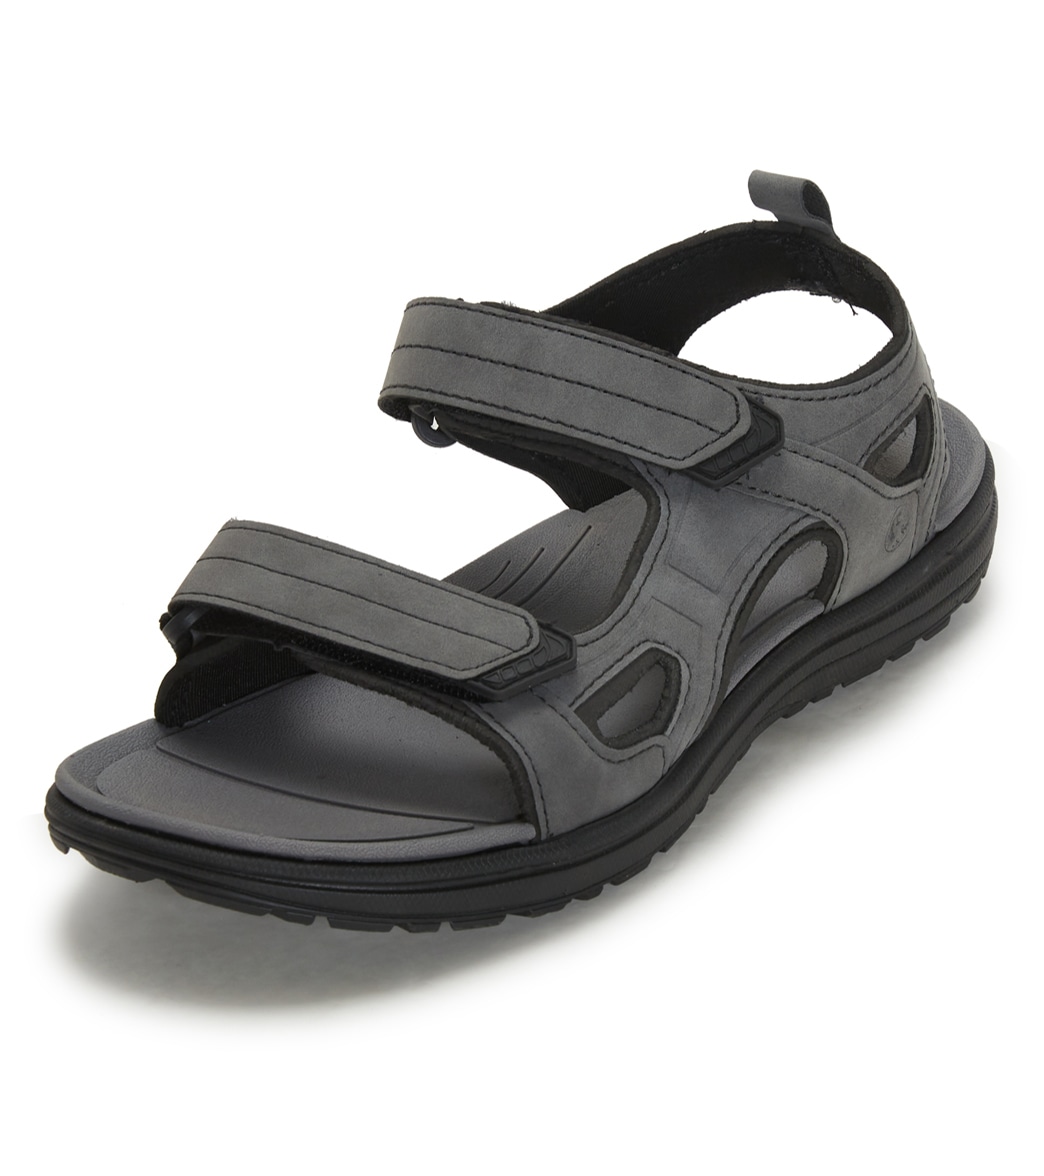 Northside Men's Riverside Lite Sport Sandals - Charcoal 080 - Swimoutlet.com